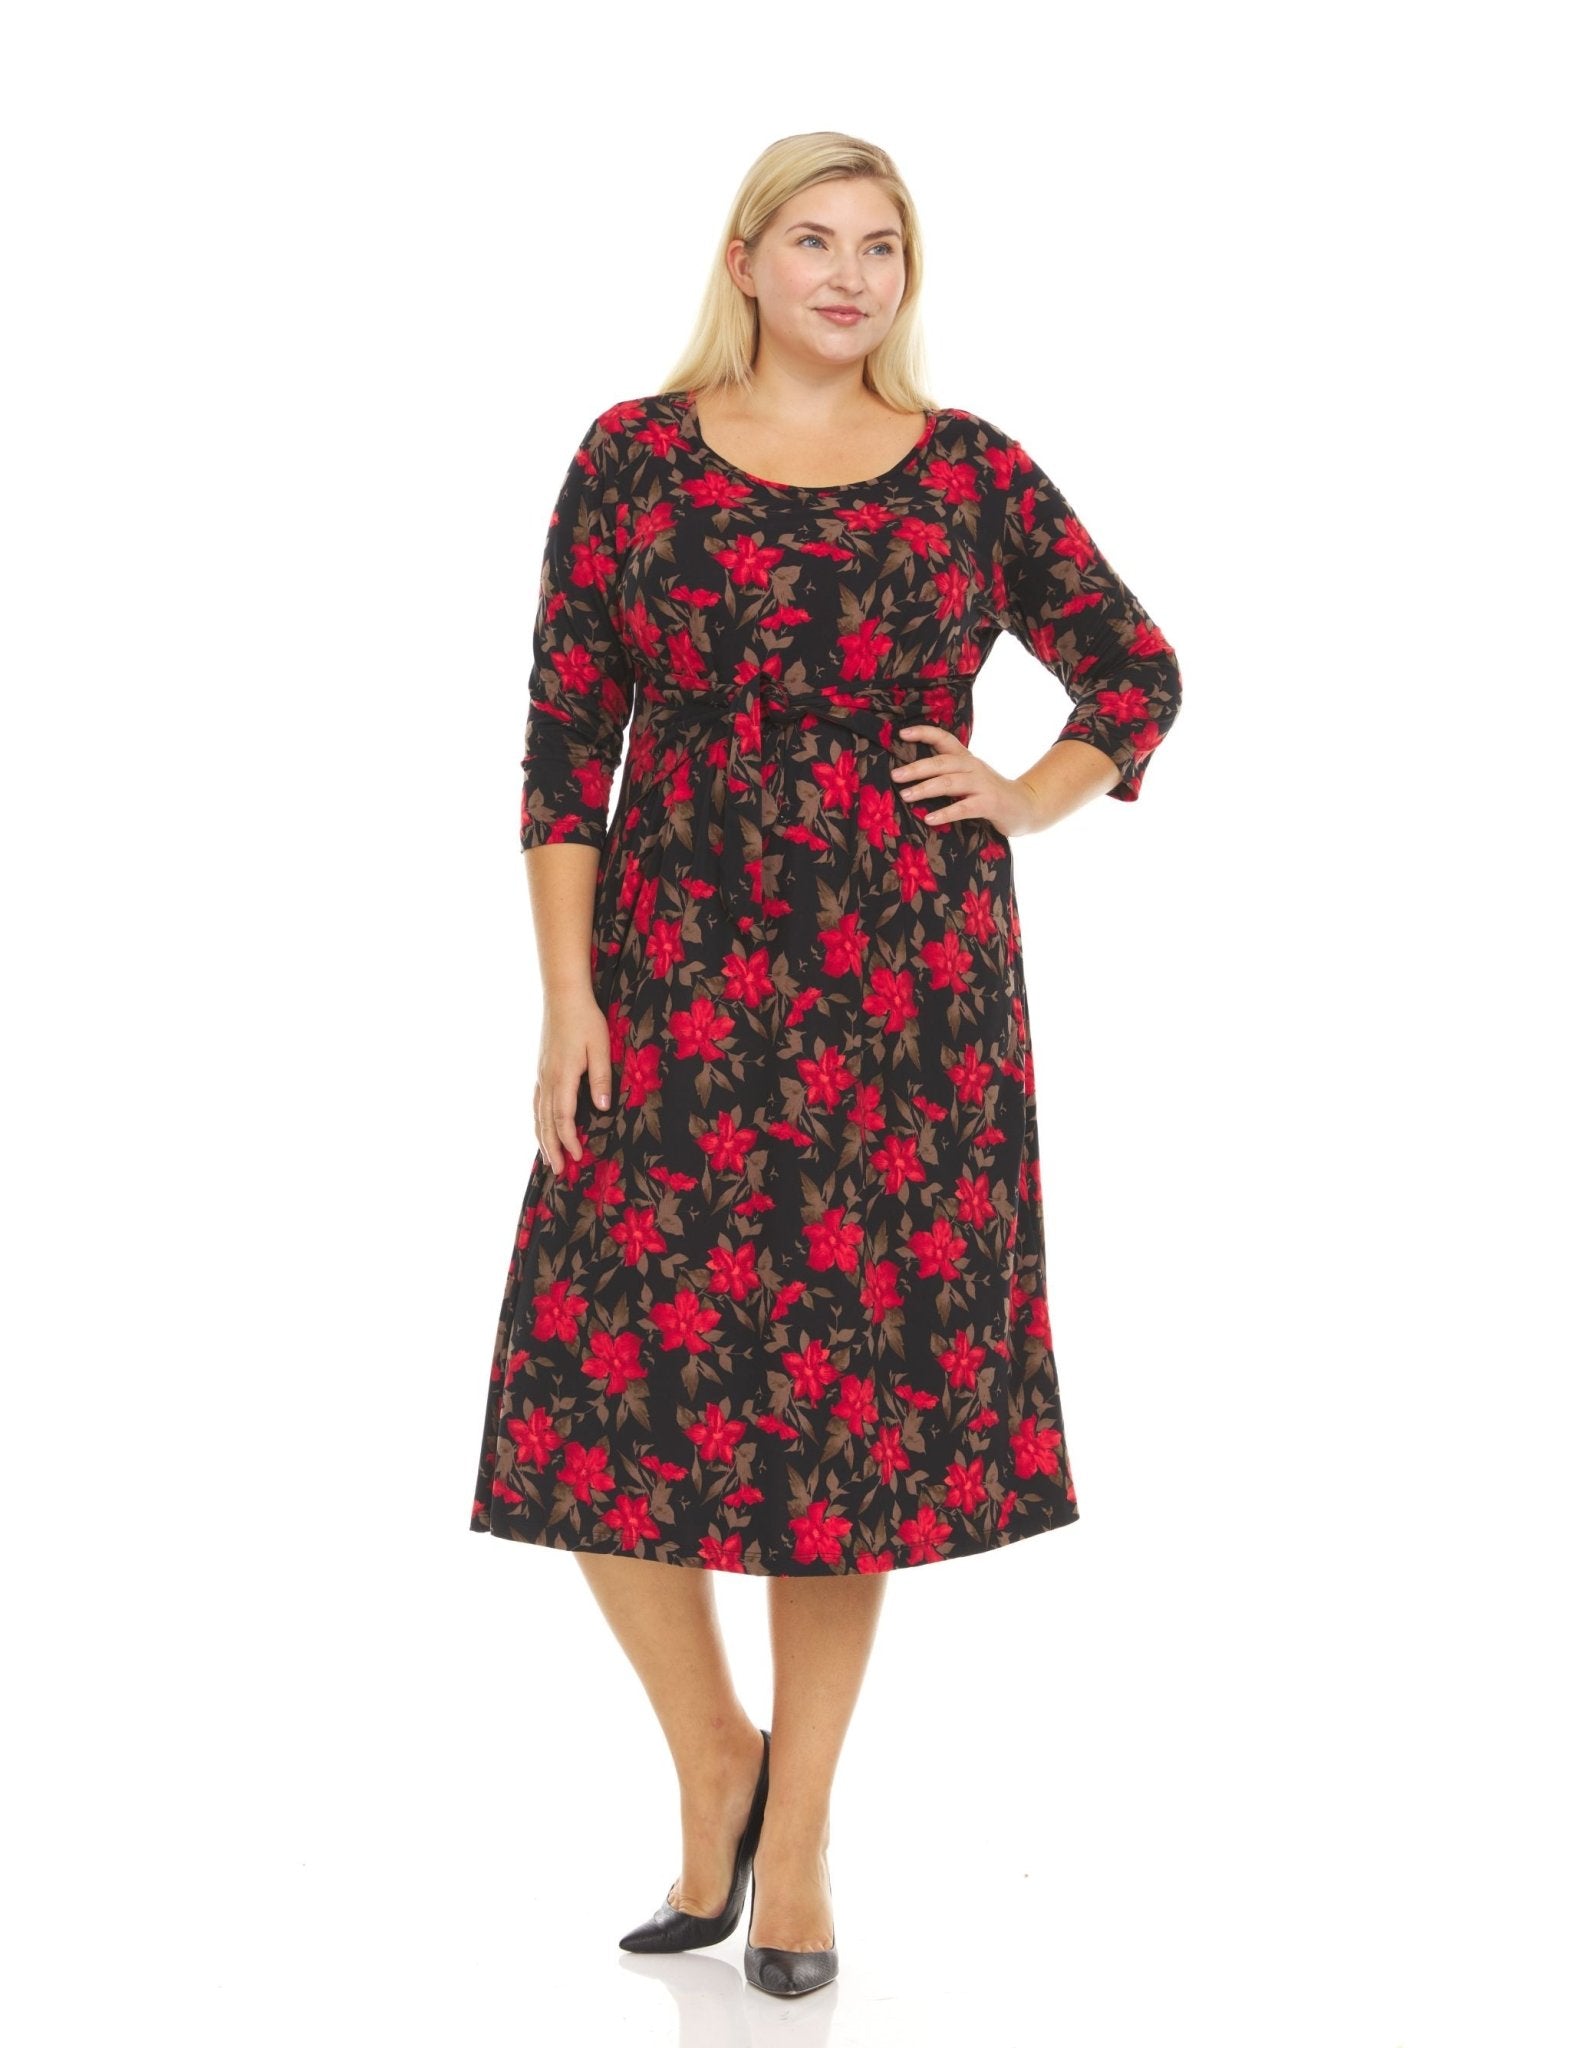 Ruby Rd. Womens Plus-Size Floral Print Dress Rose Multi Size 3X